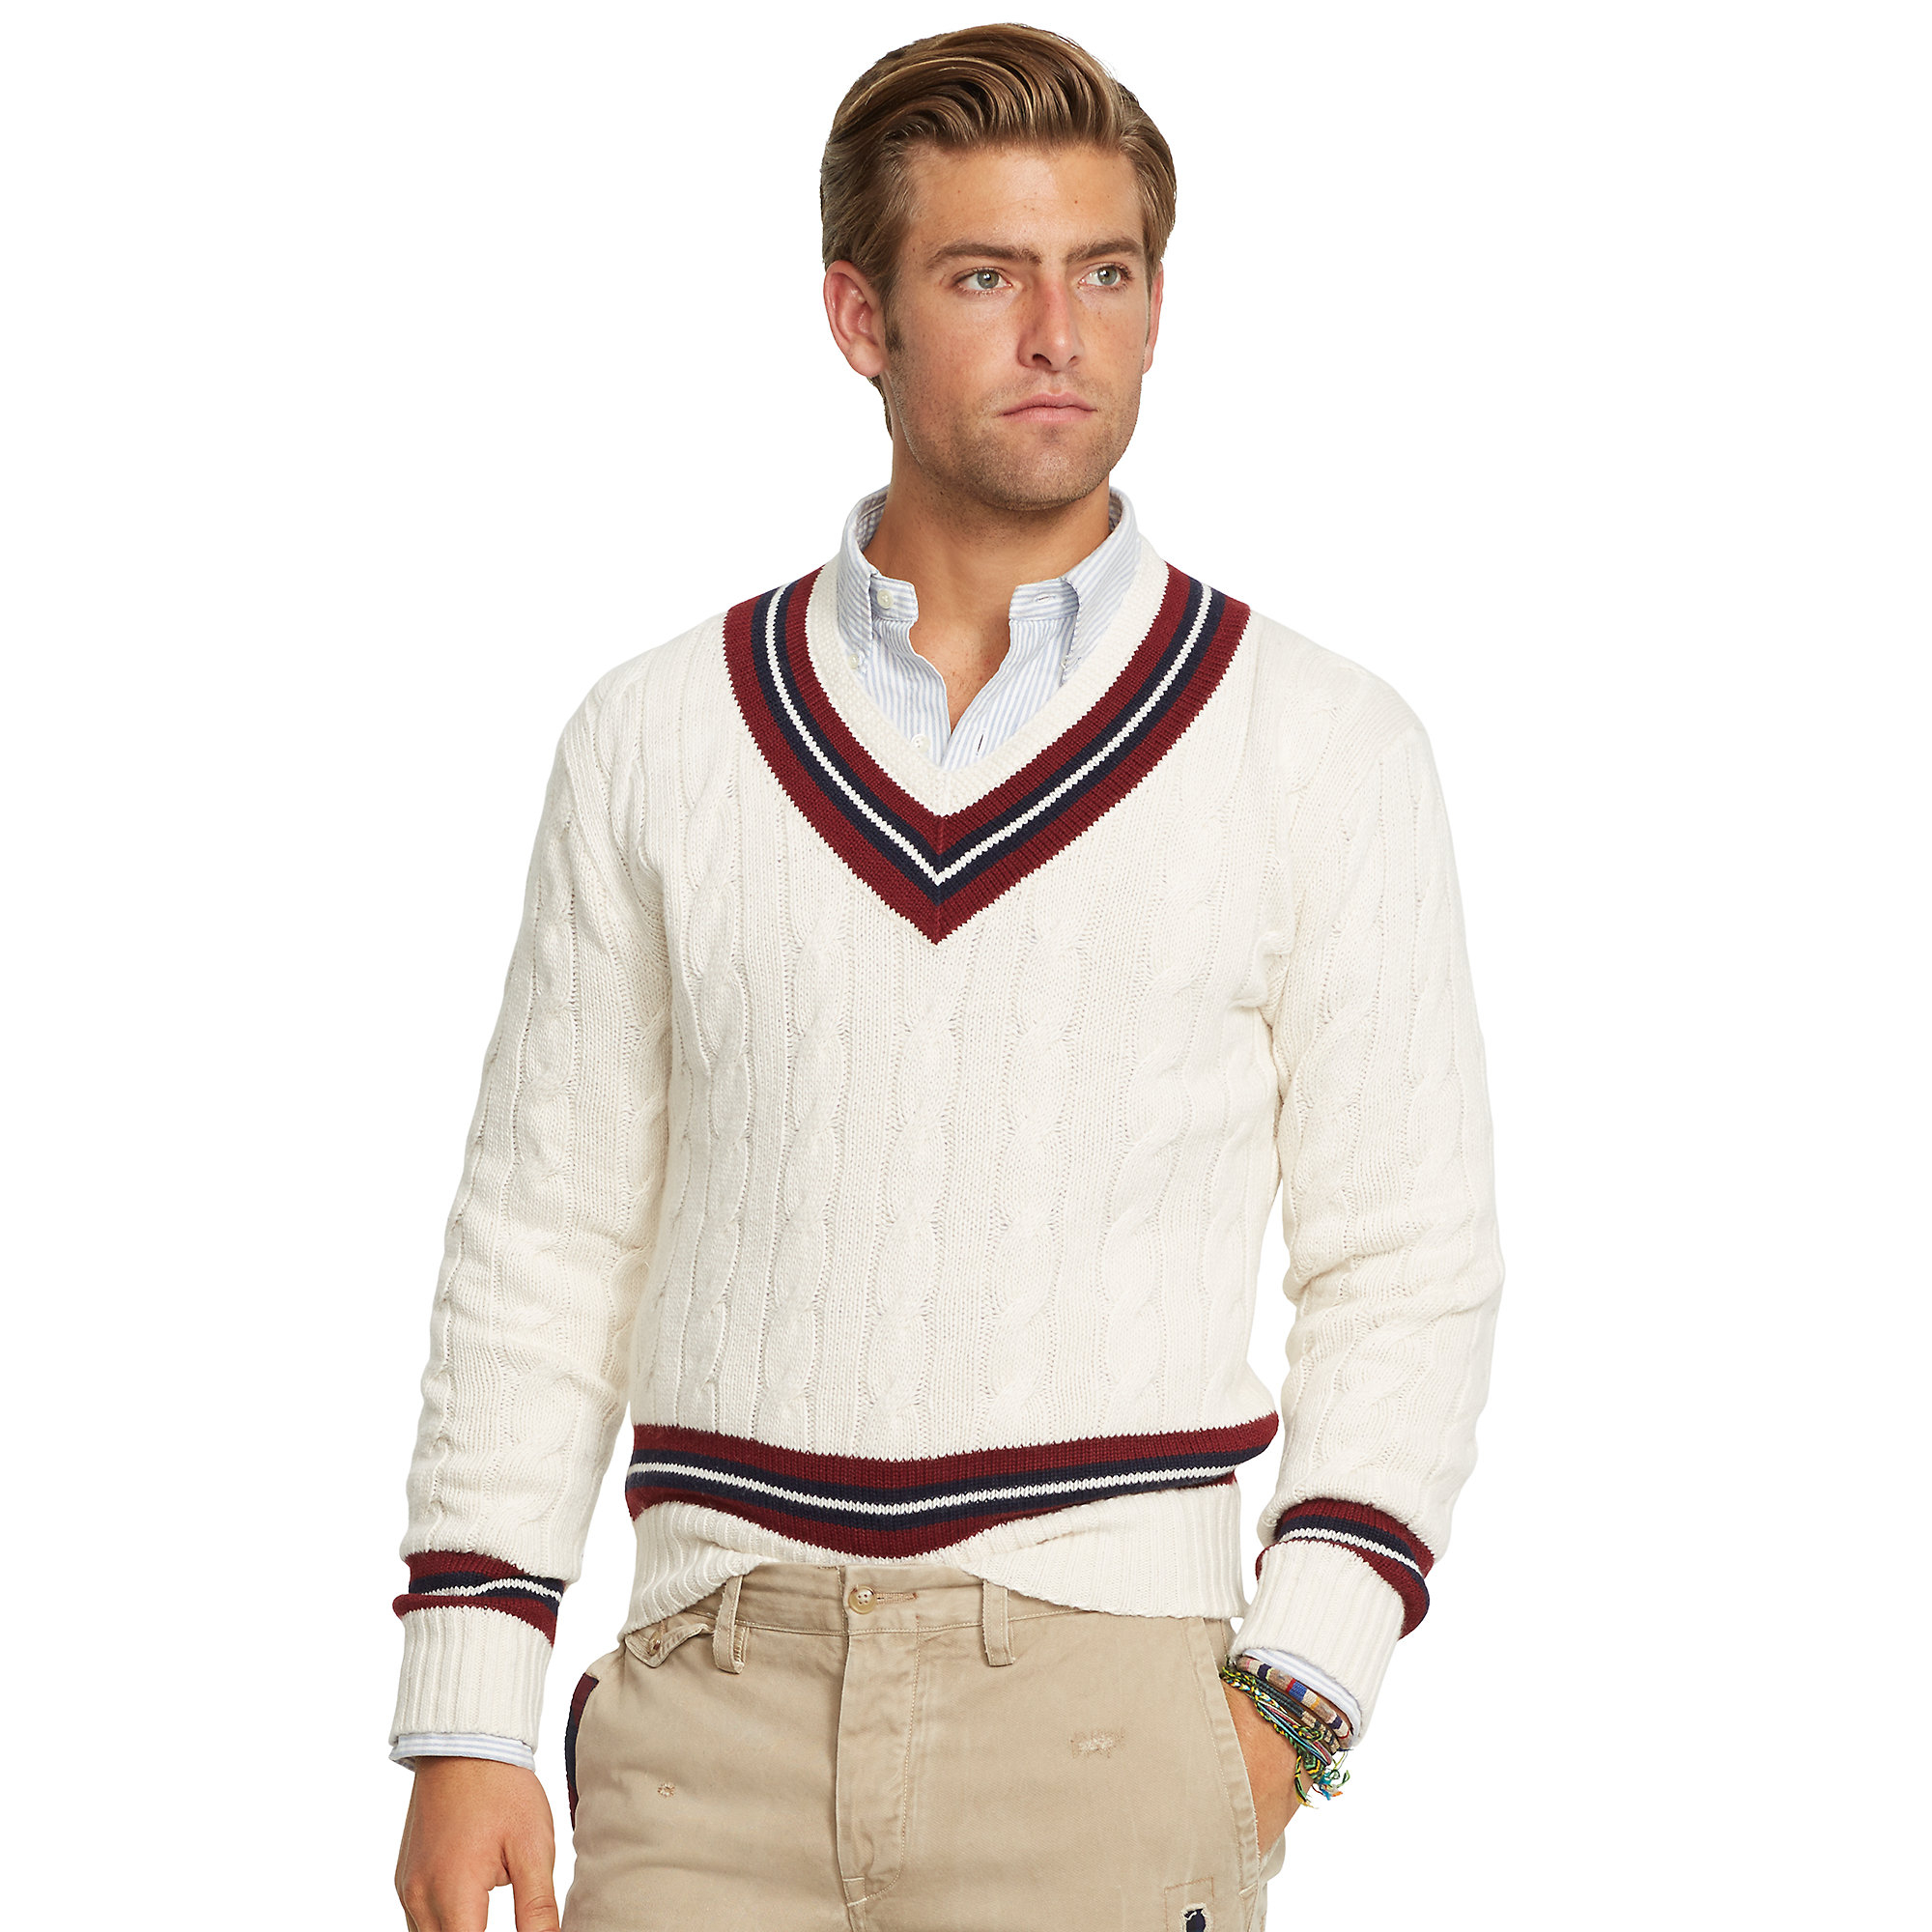 Lyst - Polo ralph lauren Cotton-Blend Cricket Sweater in White for Men